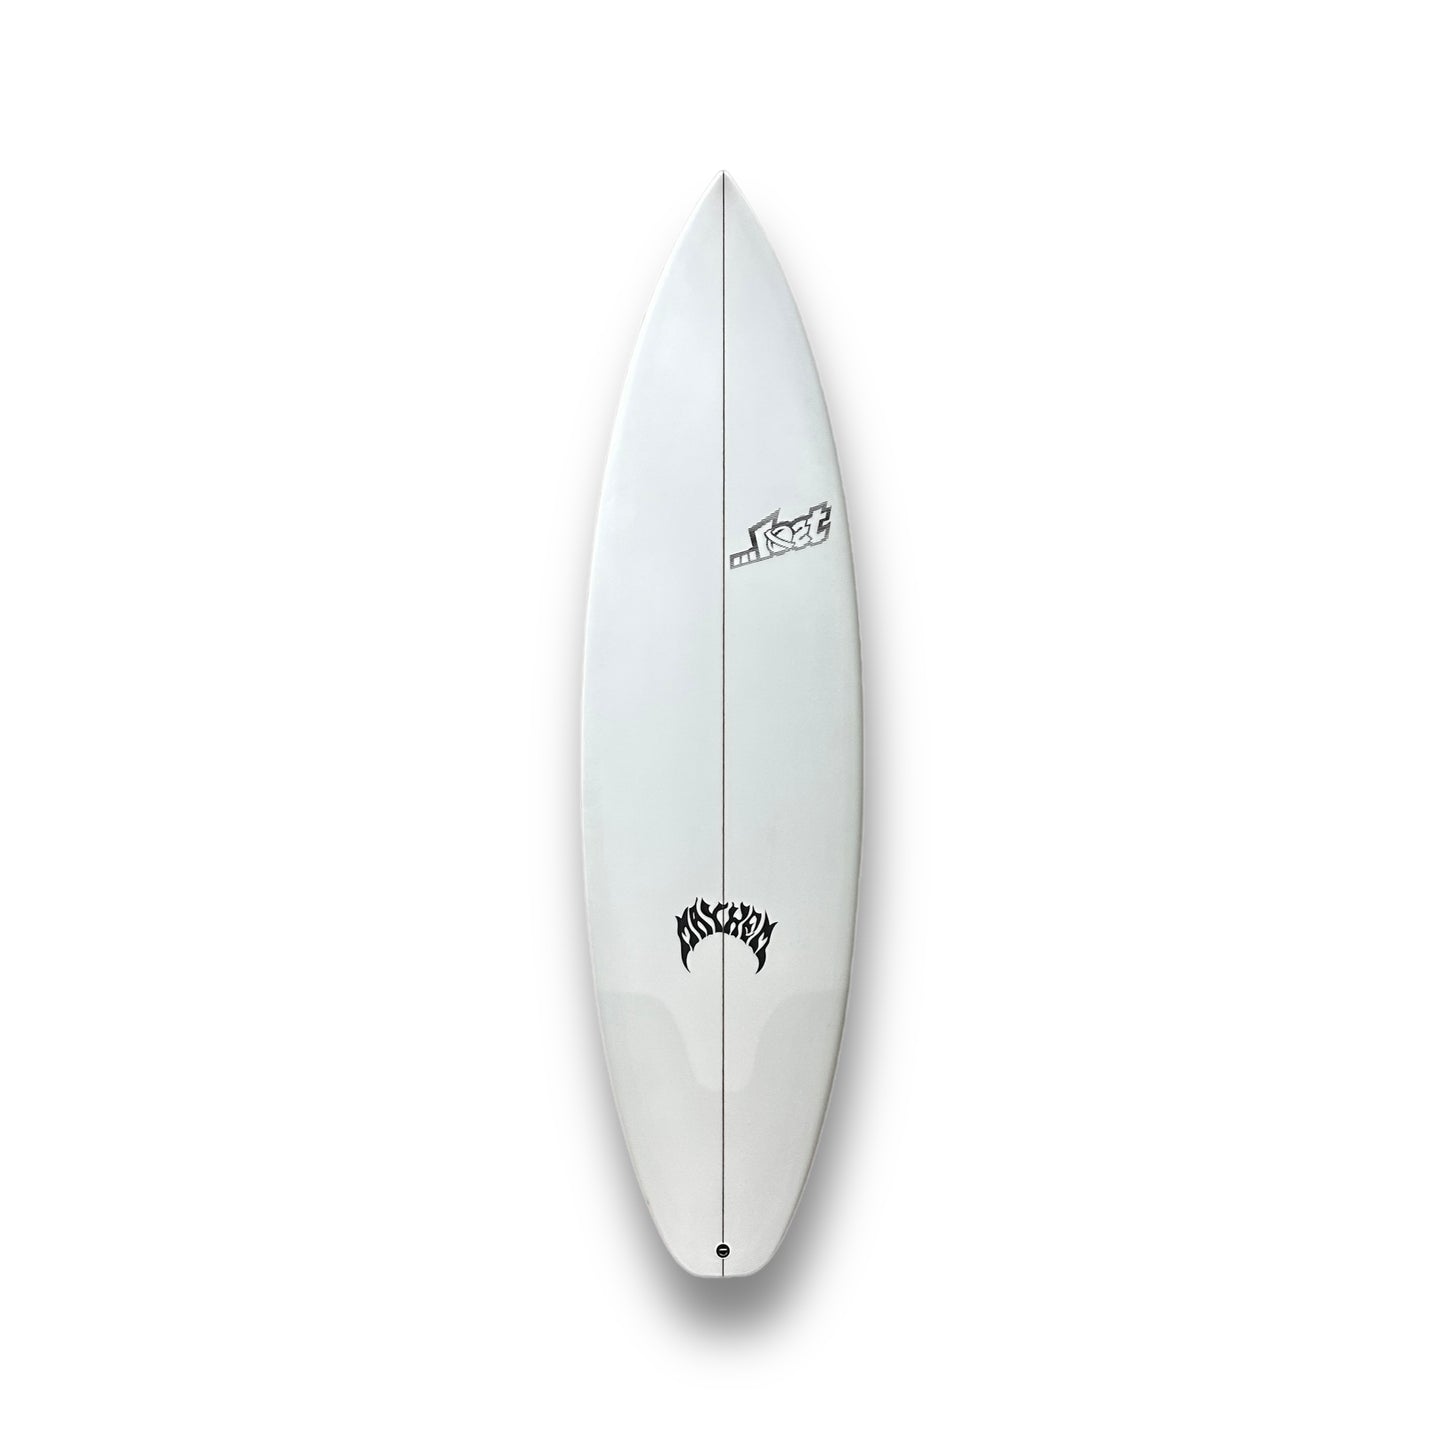 LOST MAYHEM DRIVER 3.0 5'11" SURFBOARD